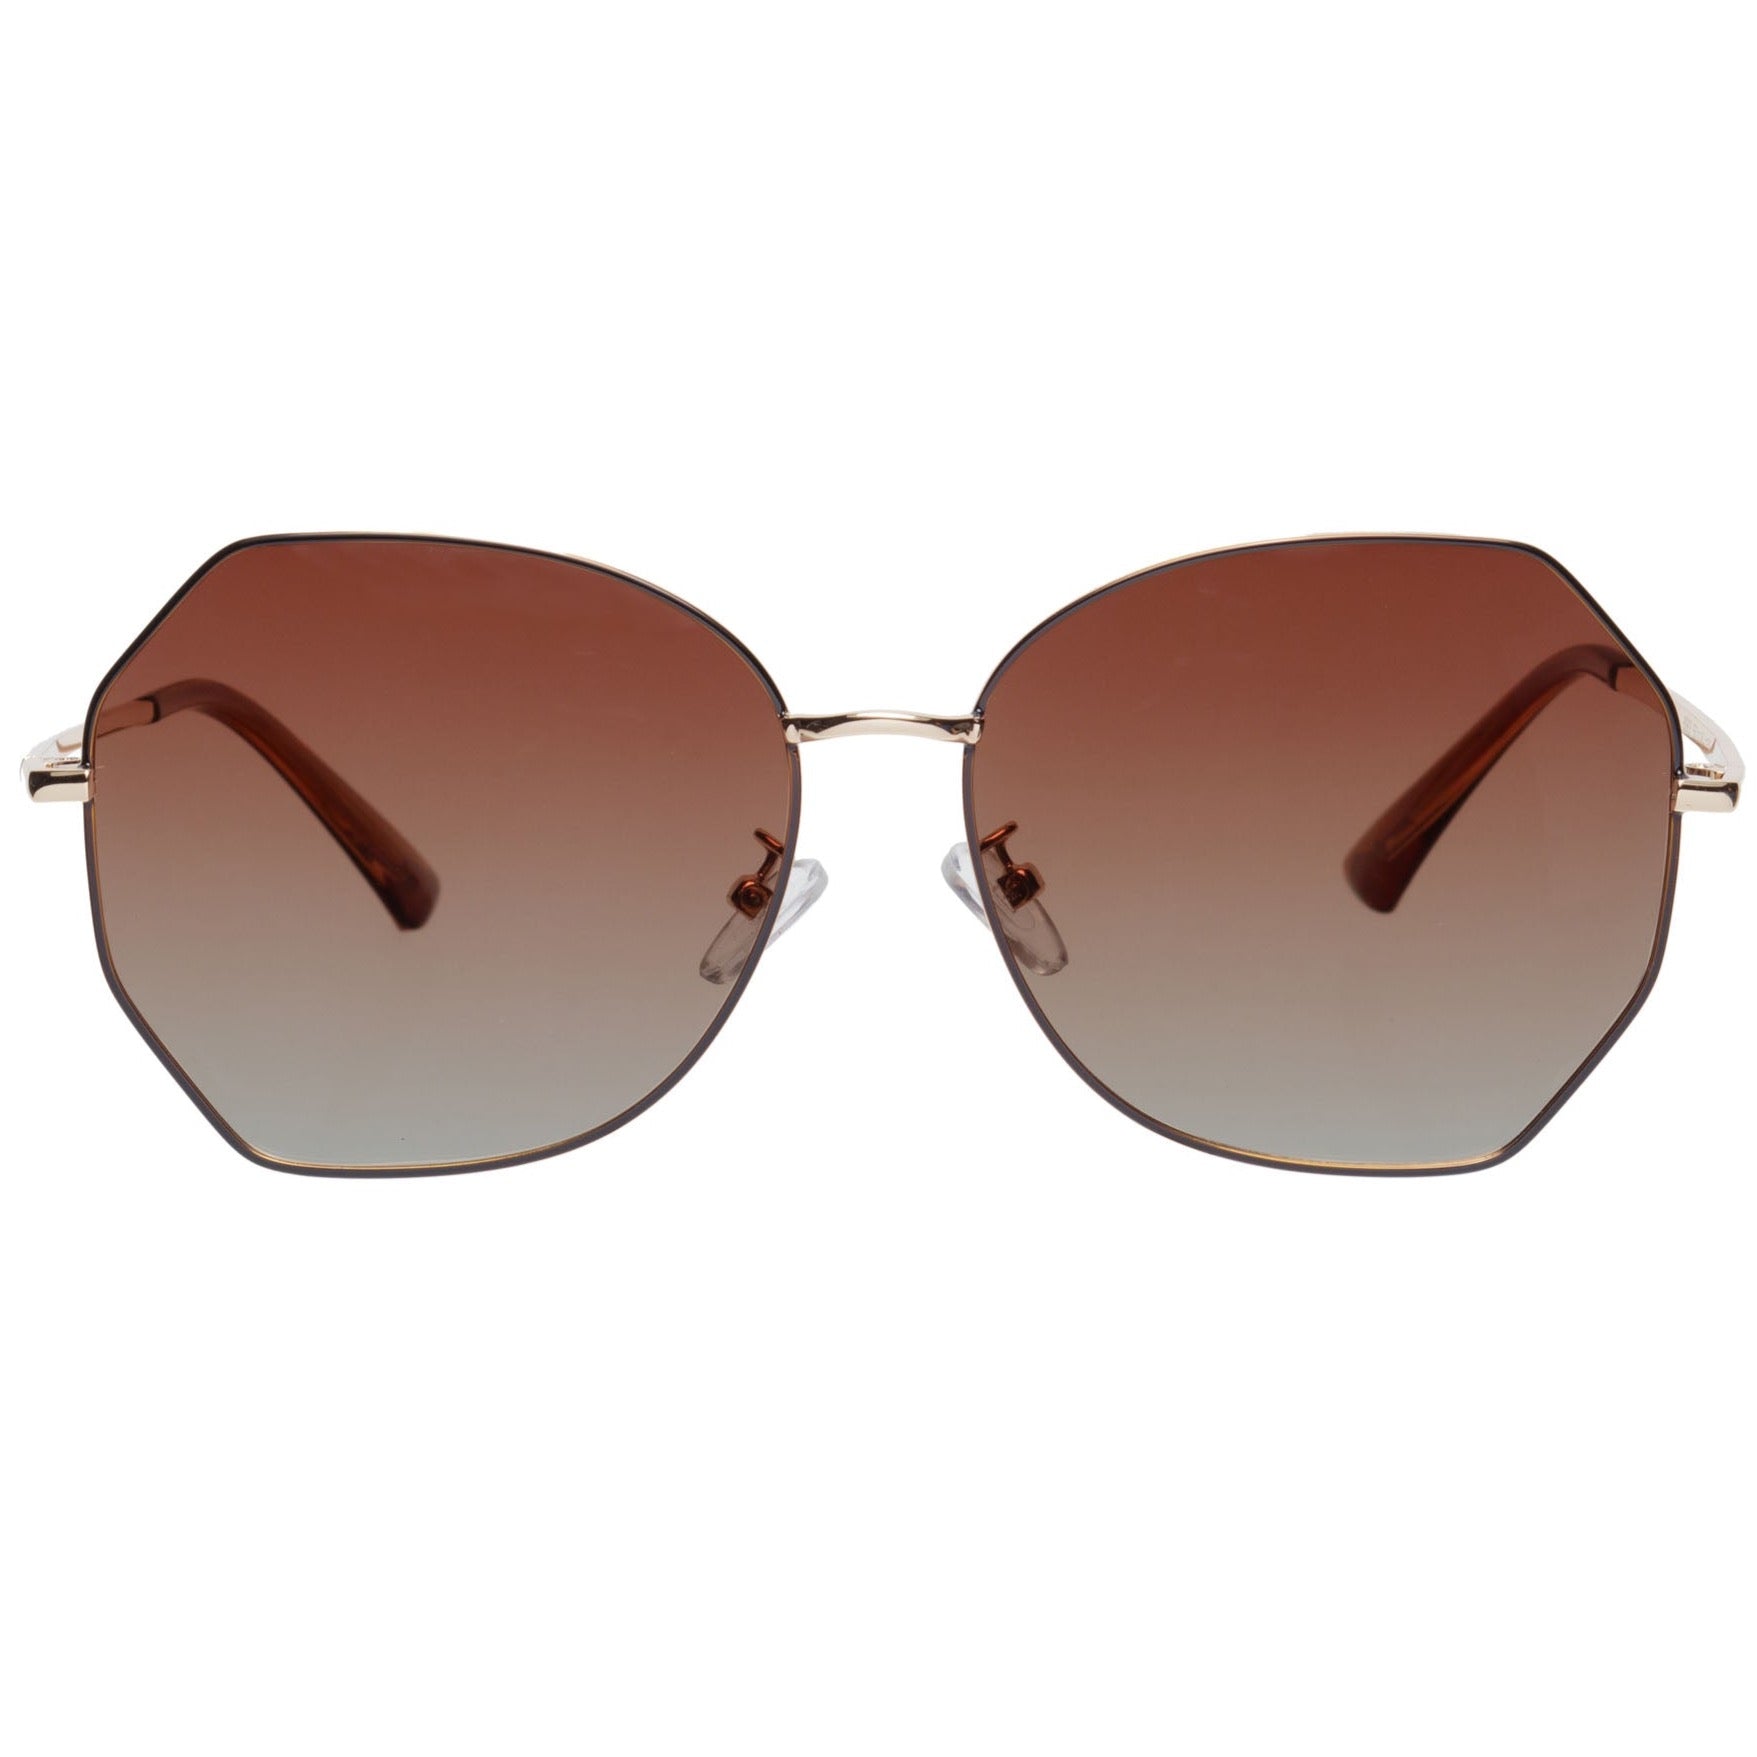 Sunglasses - EBS7007 Maui